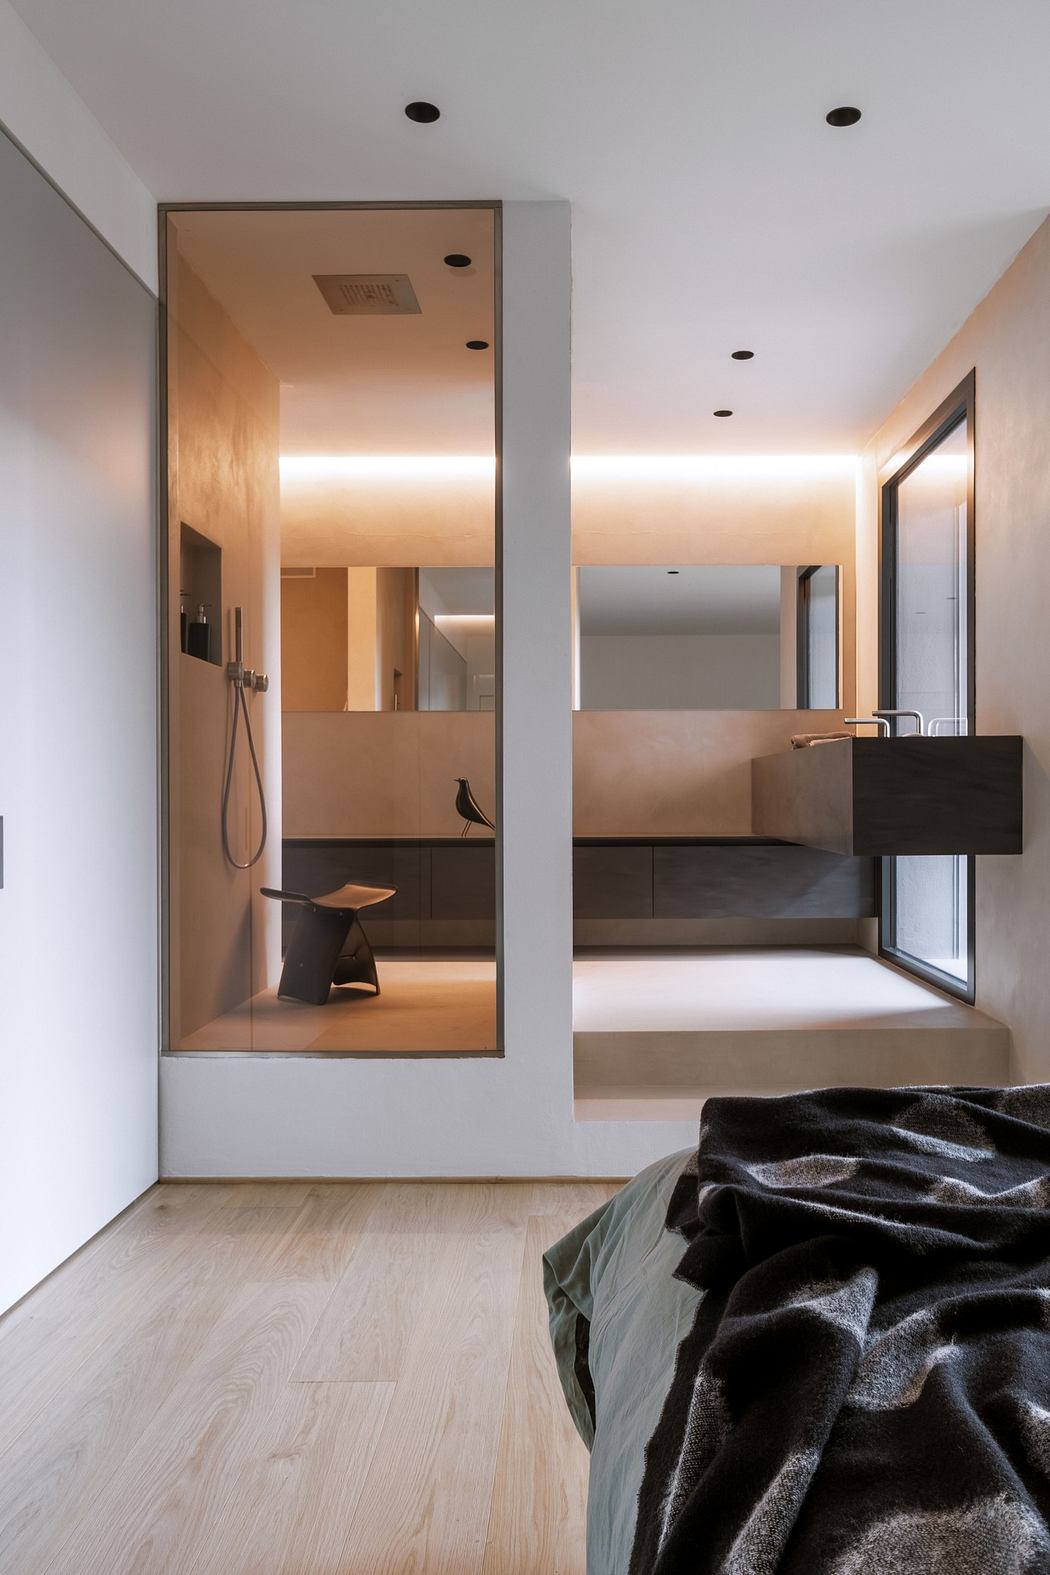 Modern minimalist bedroom with mirrored wardrobe and sleek built-in sink.